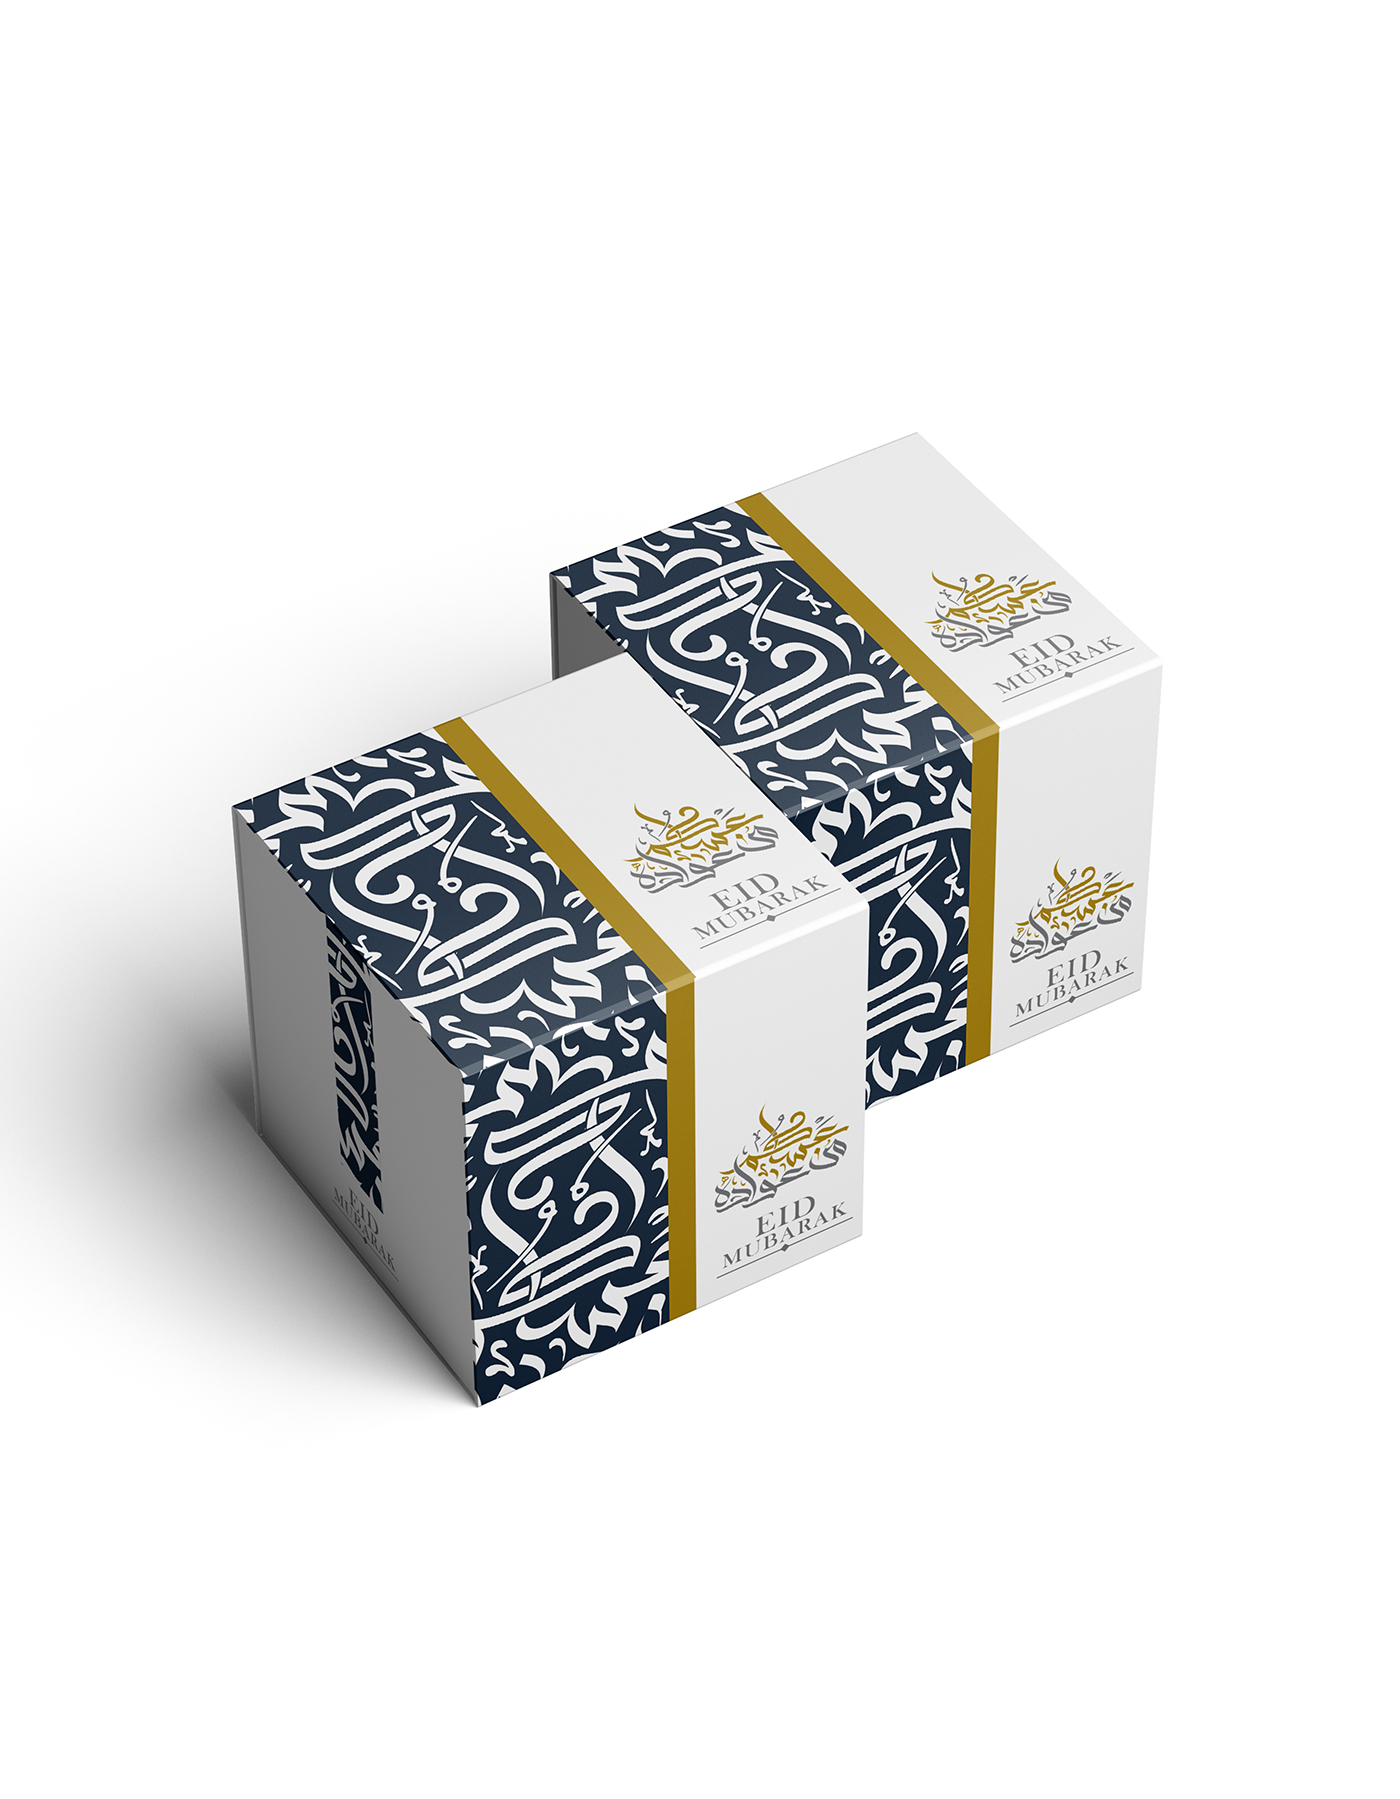 Eid ARABIC CALLIGRAPHY LOGO calligraph typo arts box gift box Happy eid eid mubarak typography  